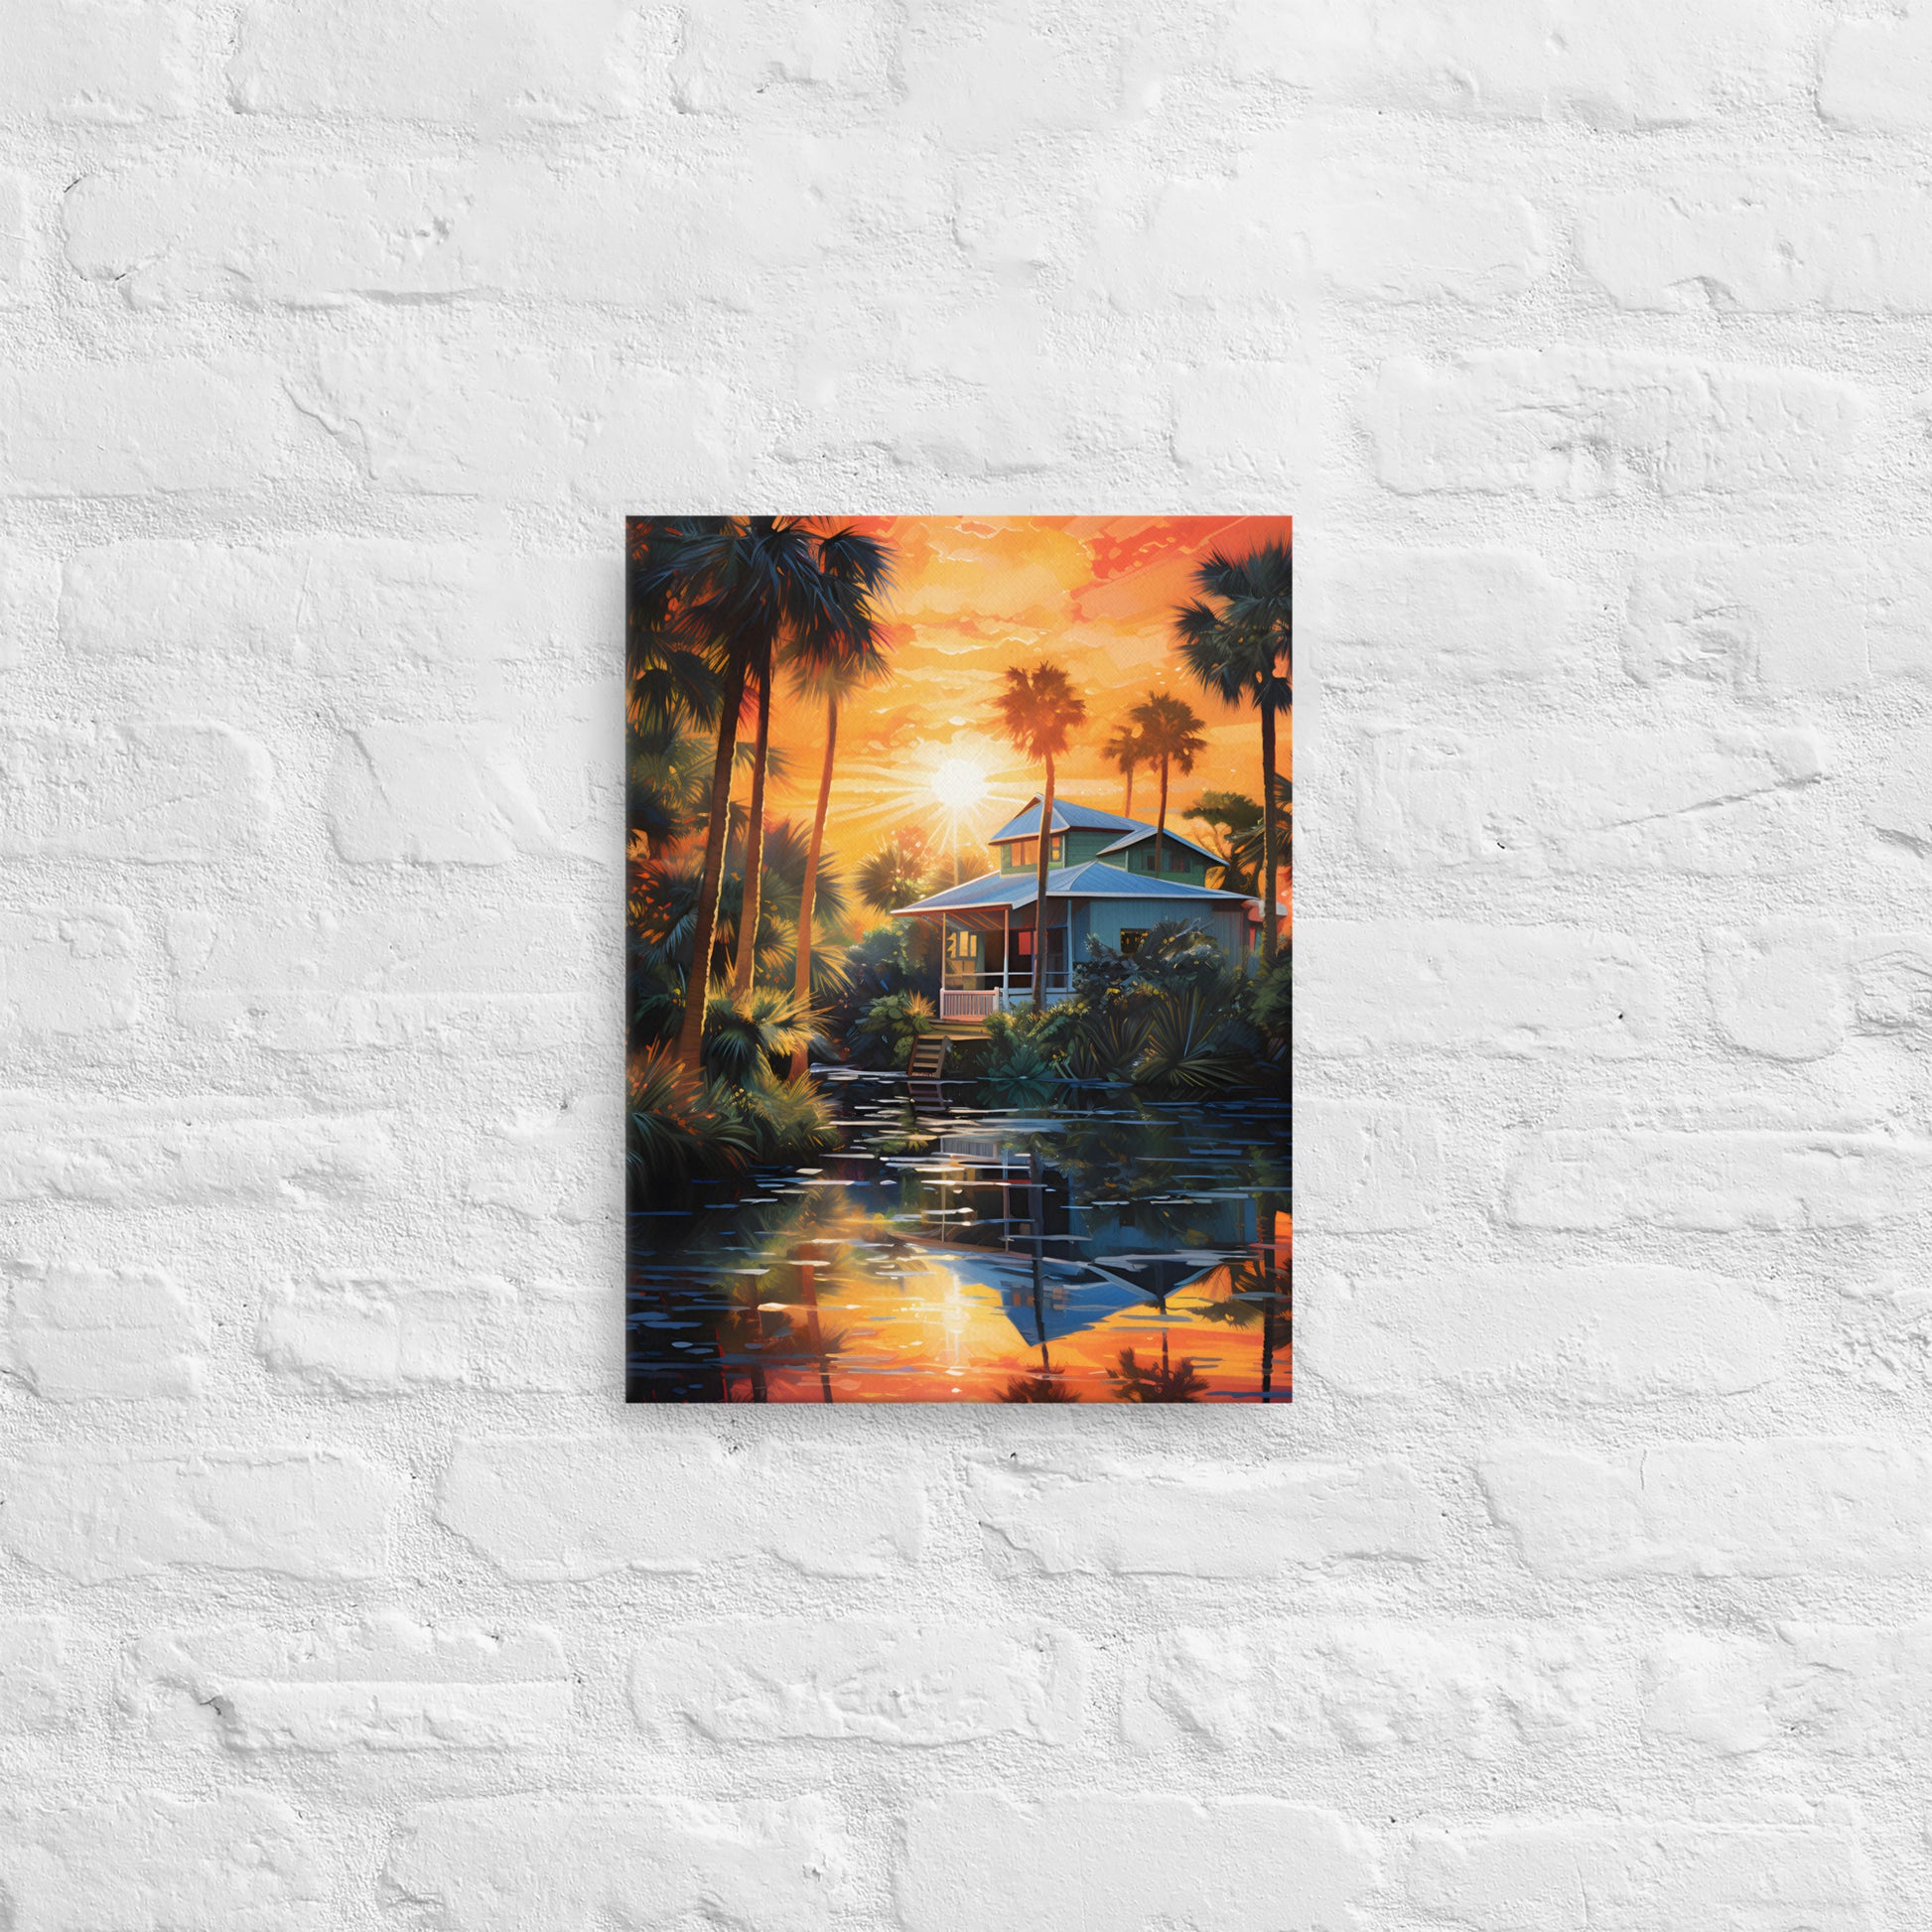 Florida Home at Sunset Canvas Print 12x16